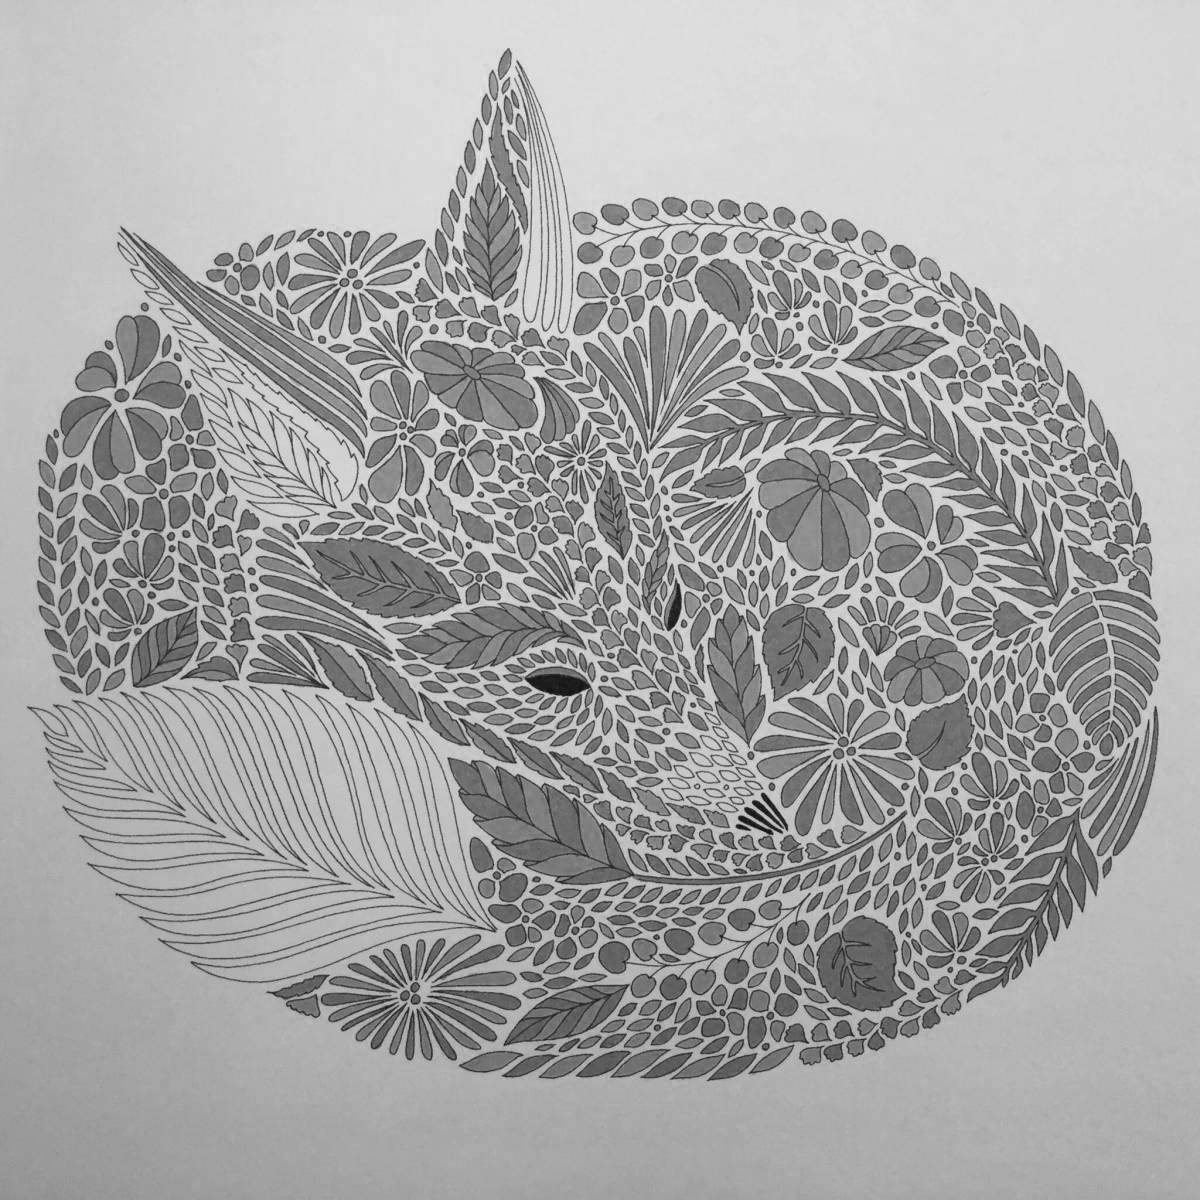 Bright anti-stress fox coloring